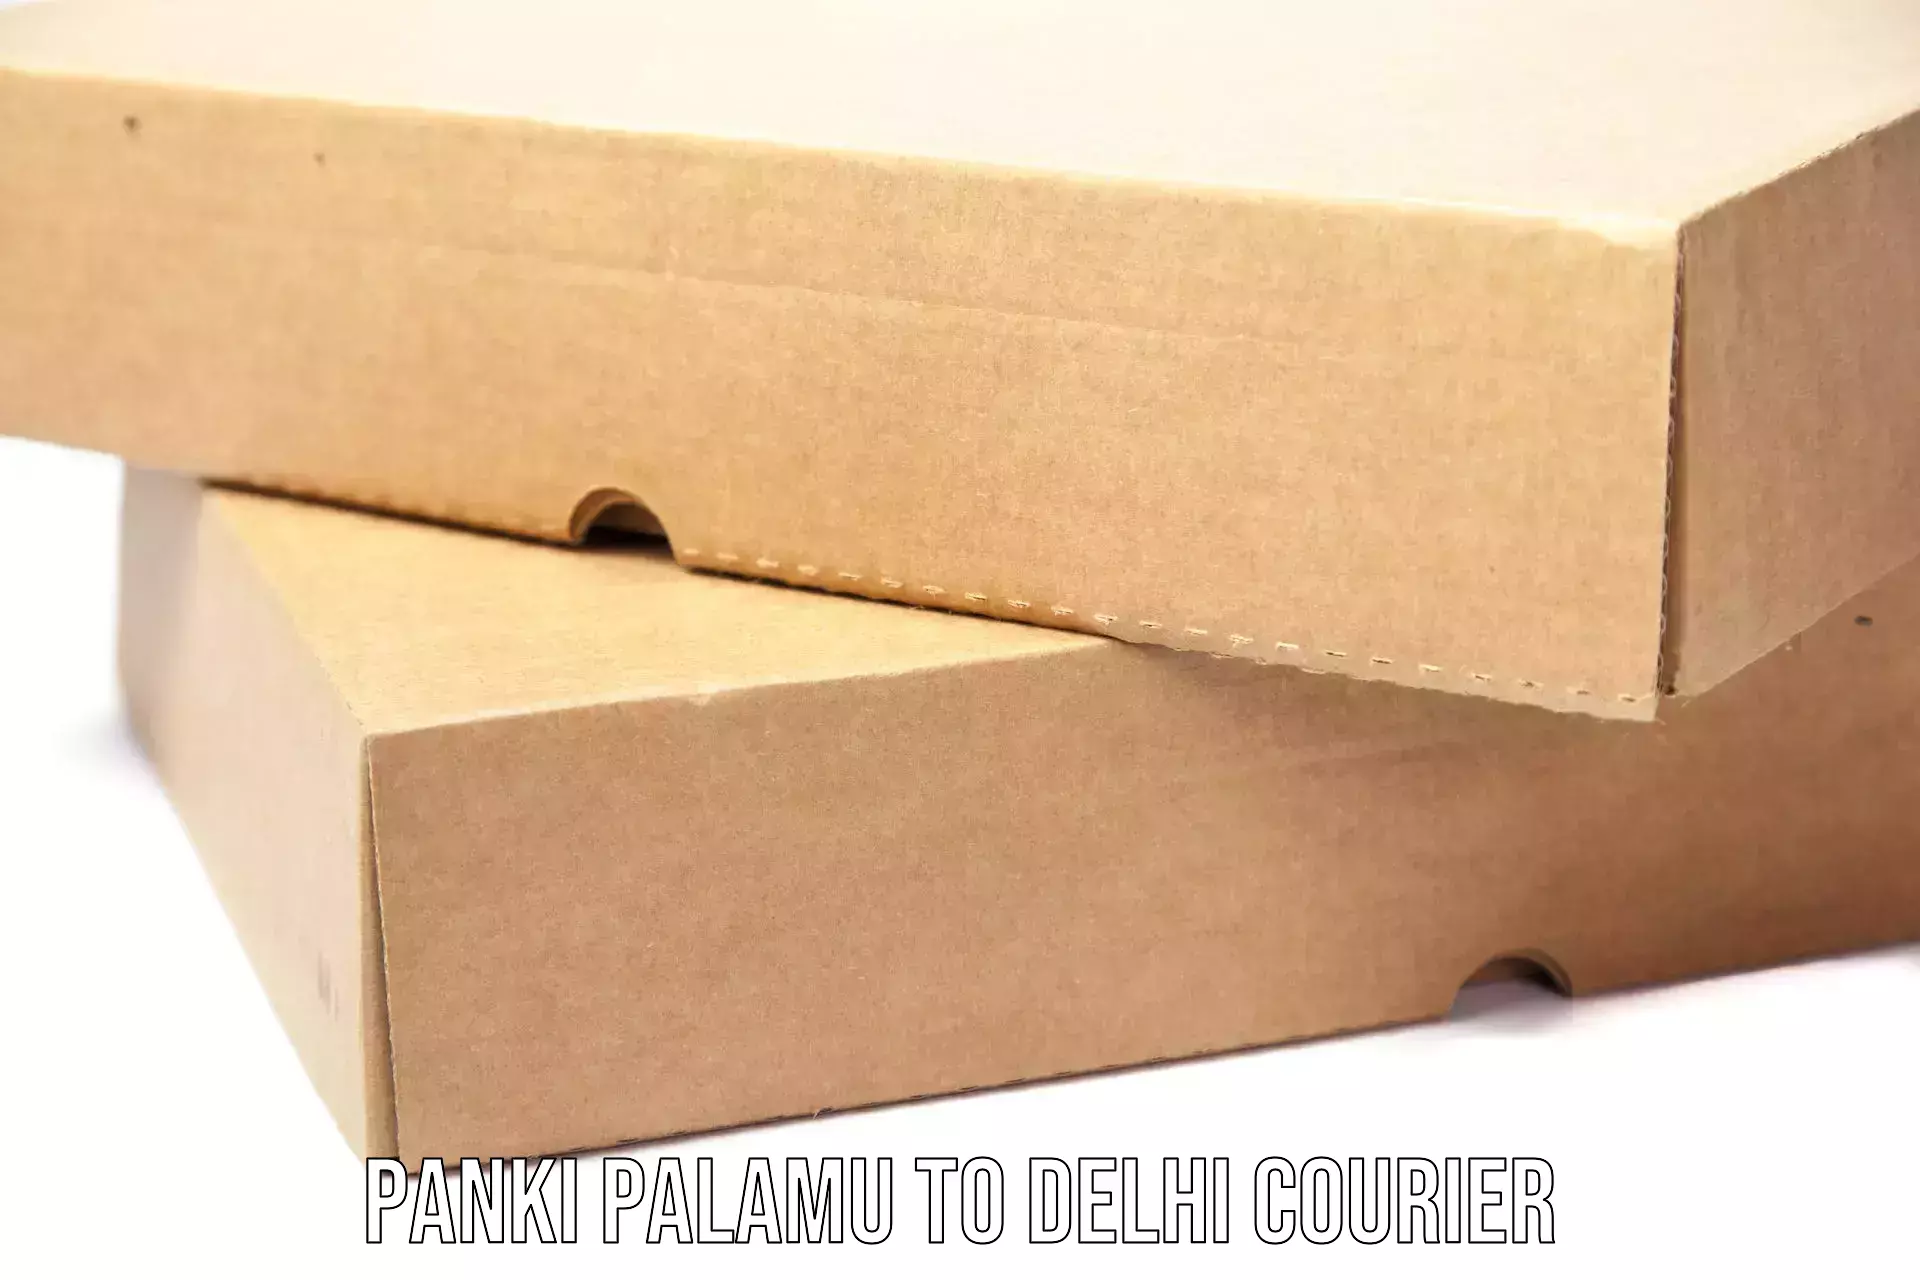 Courier service partnerships Panki Palamu to Sansad Marg